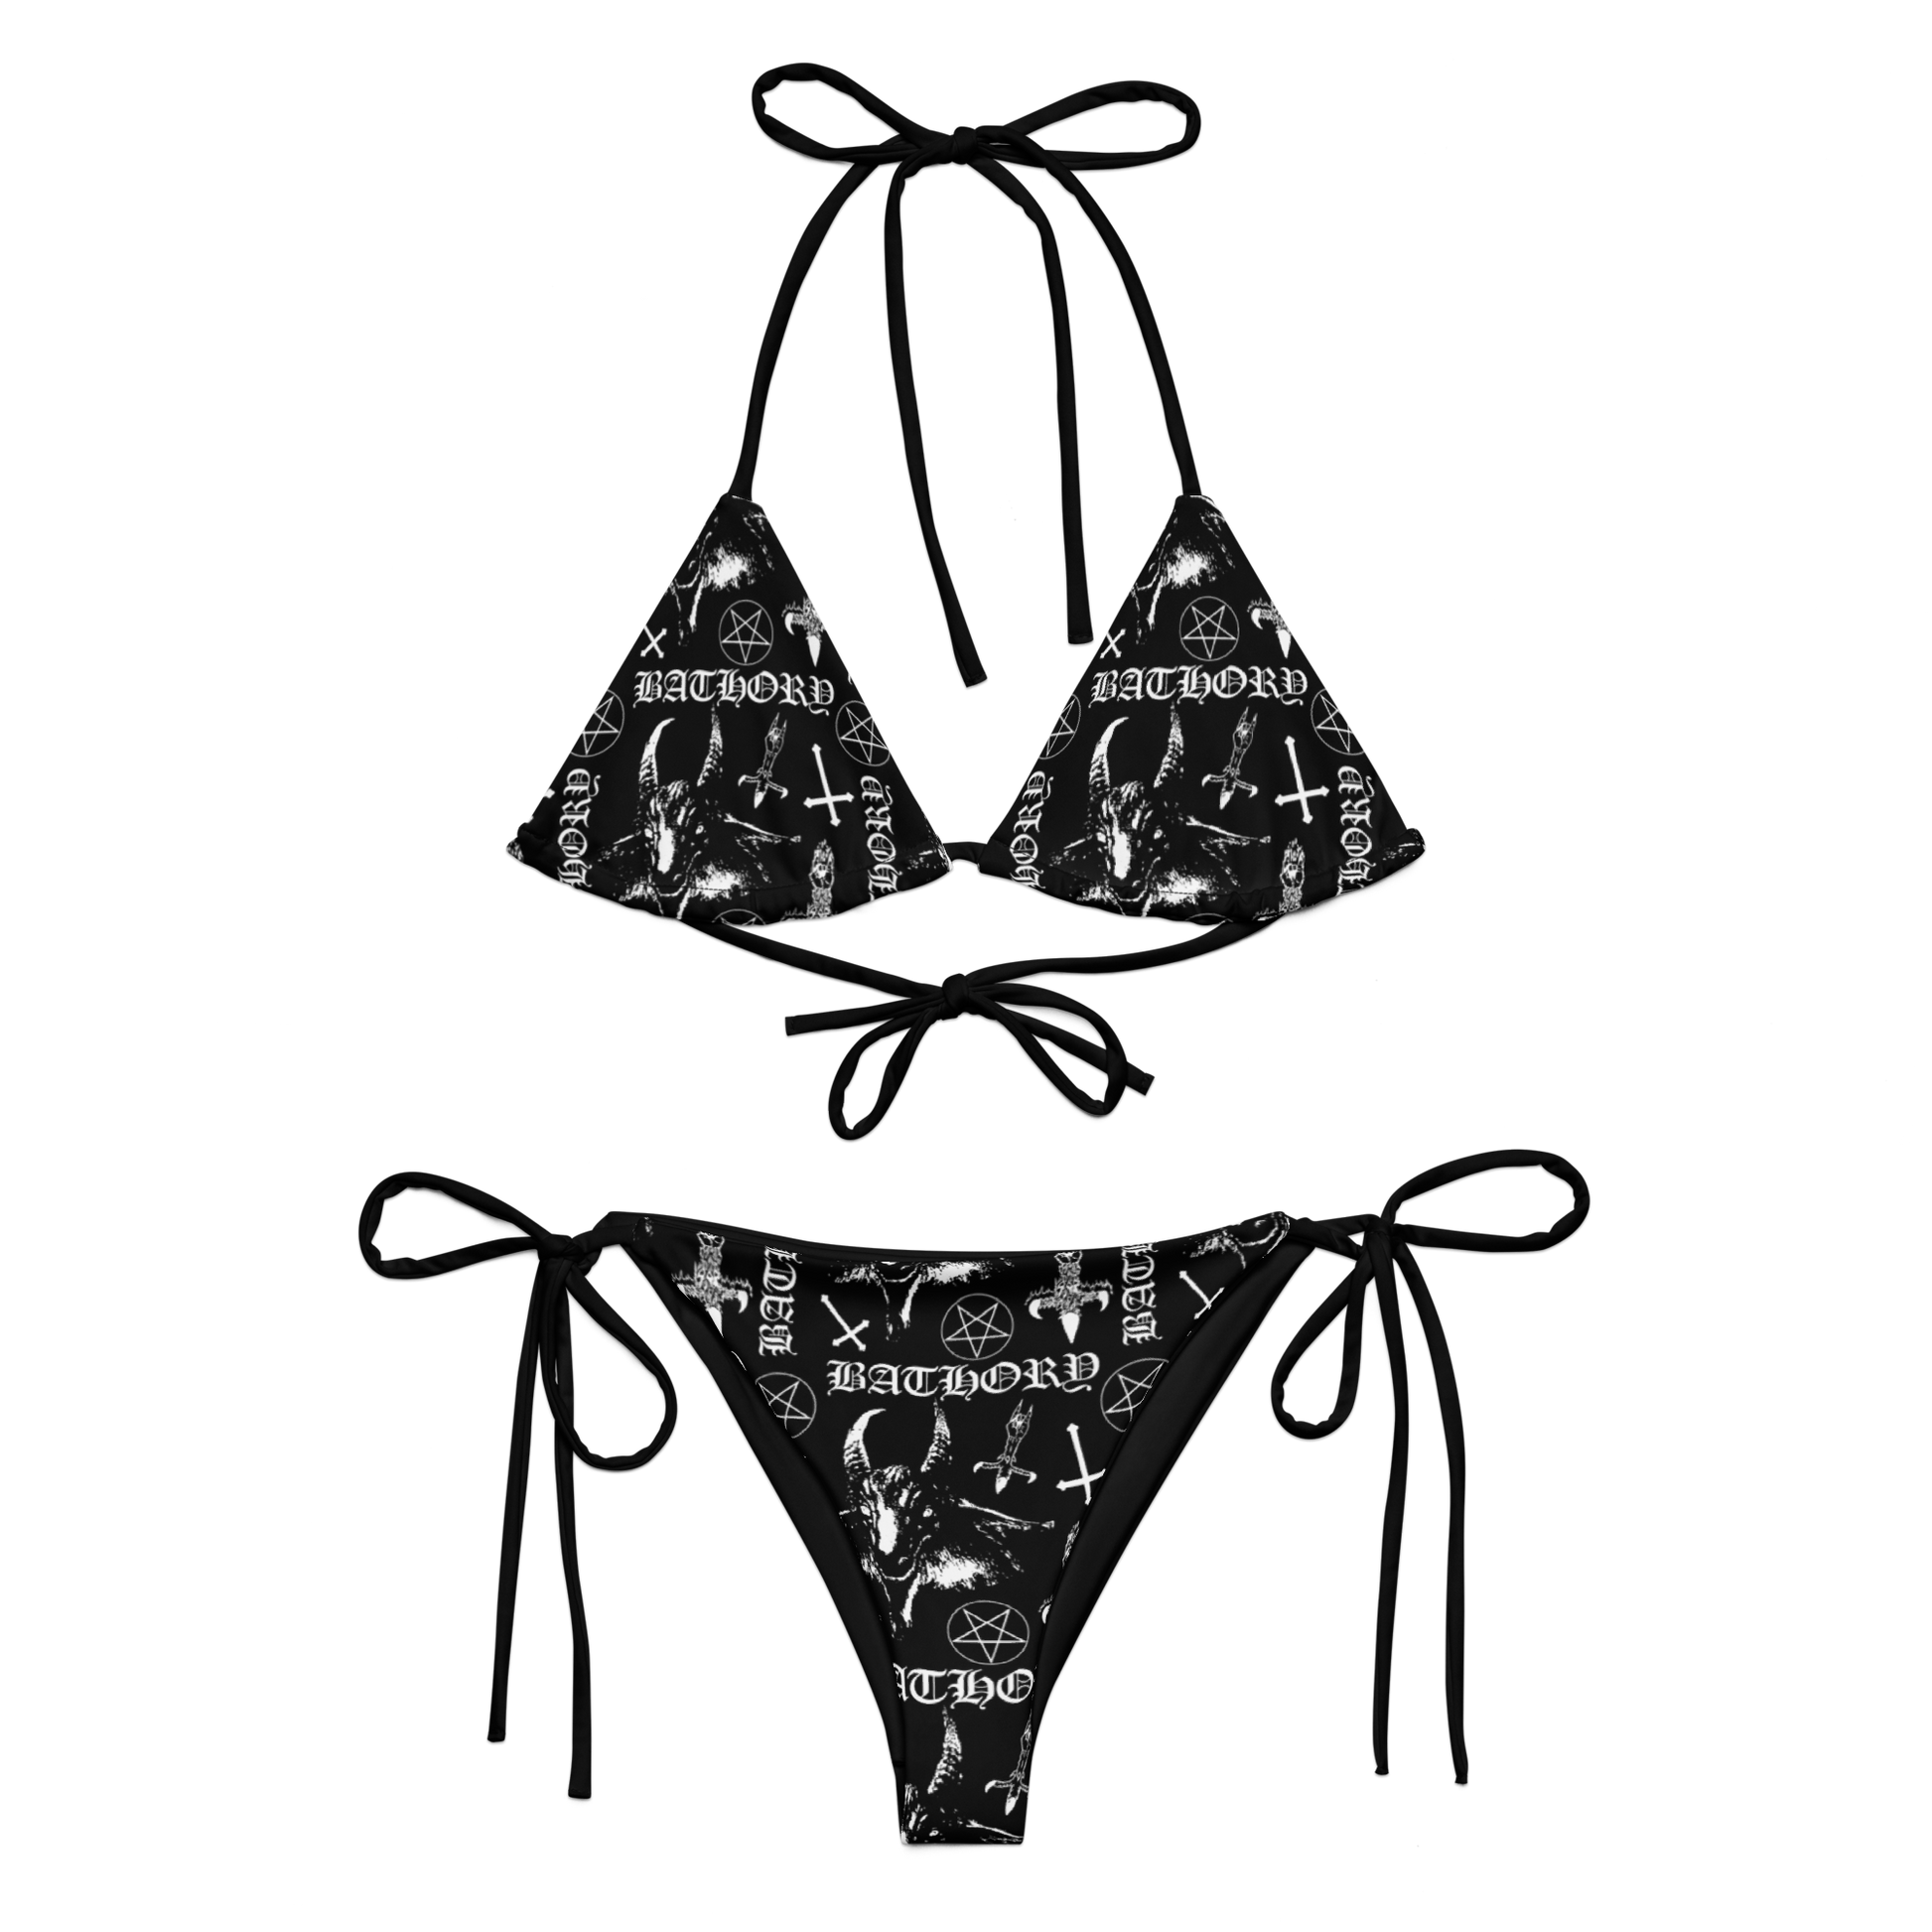 Bathory black and white pattern bikini swimsuit by Metal Mistress